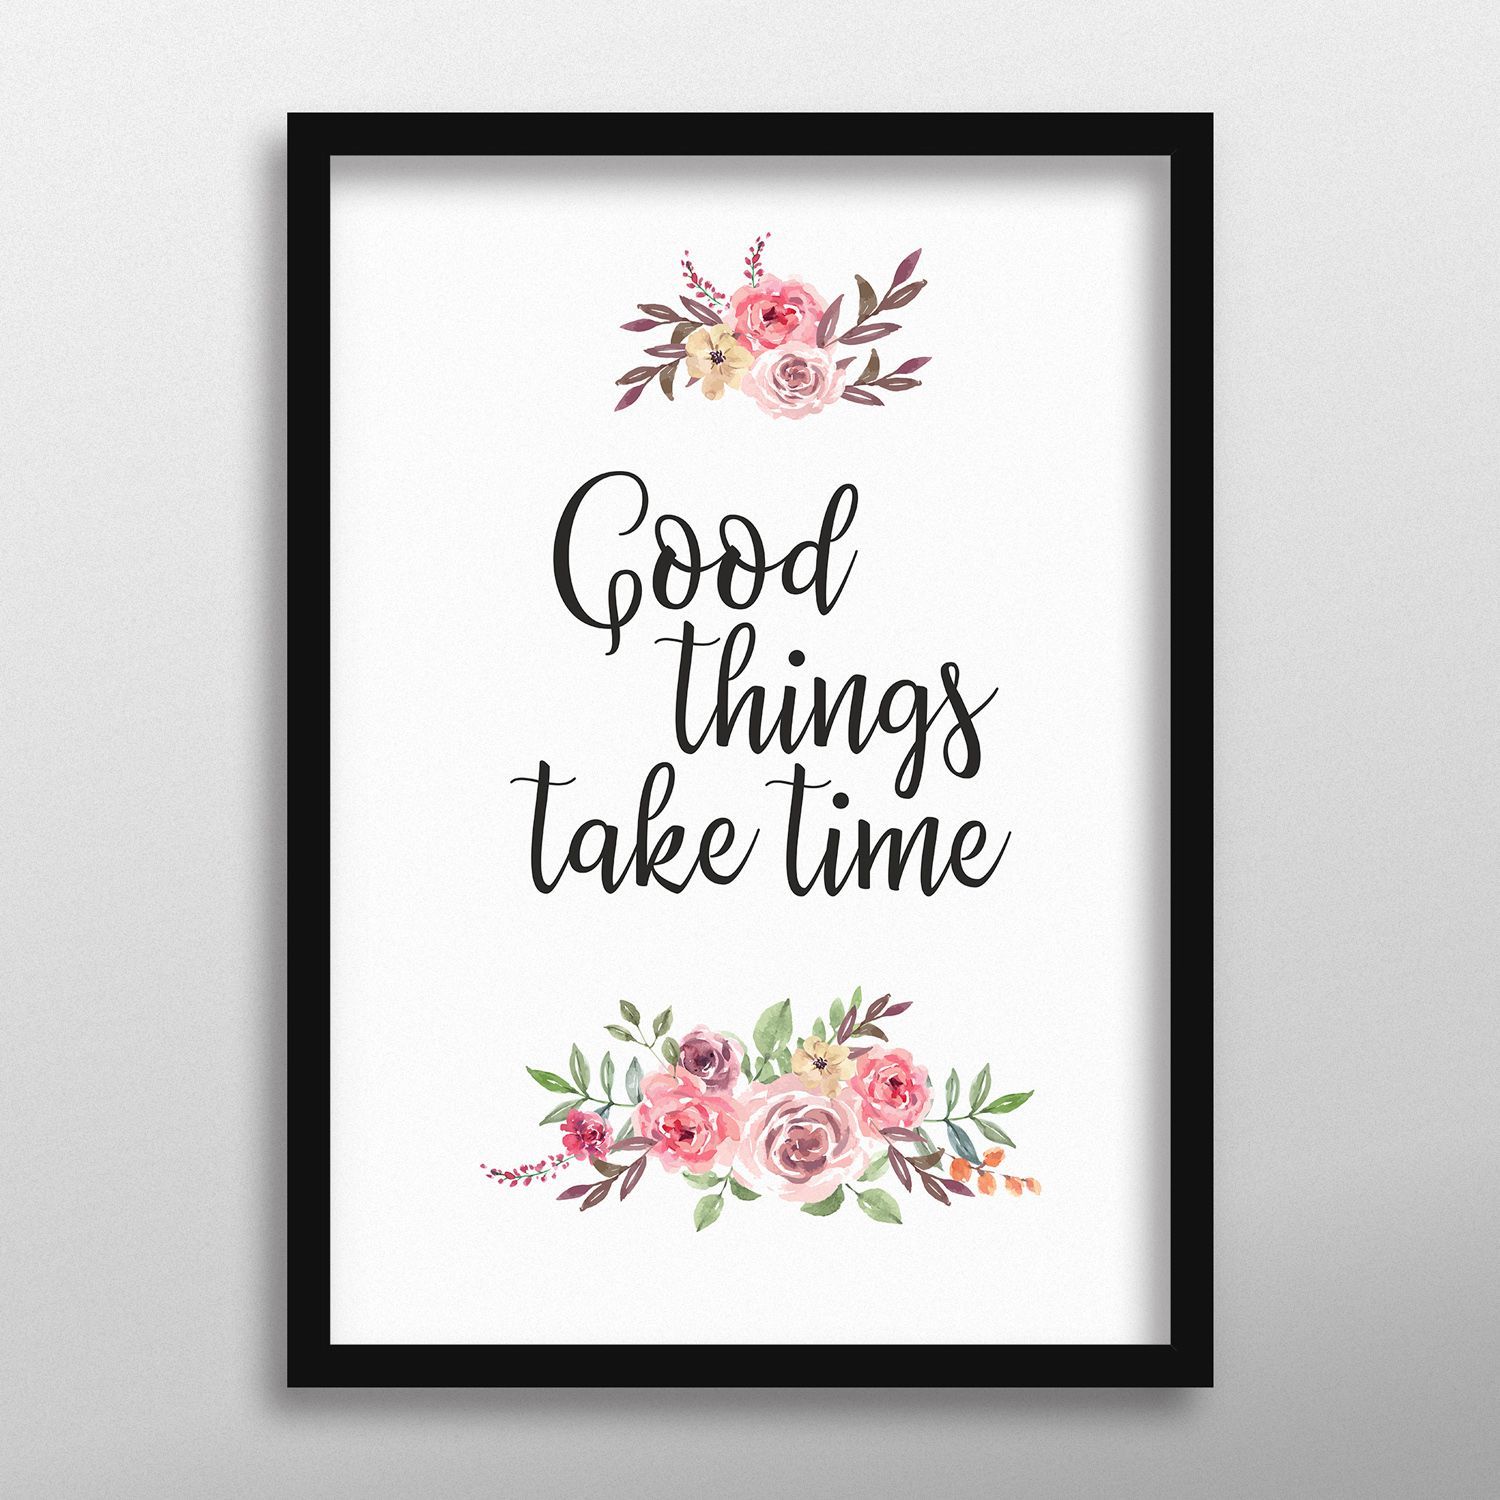 Постер "Good things take time"